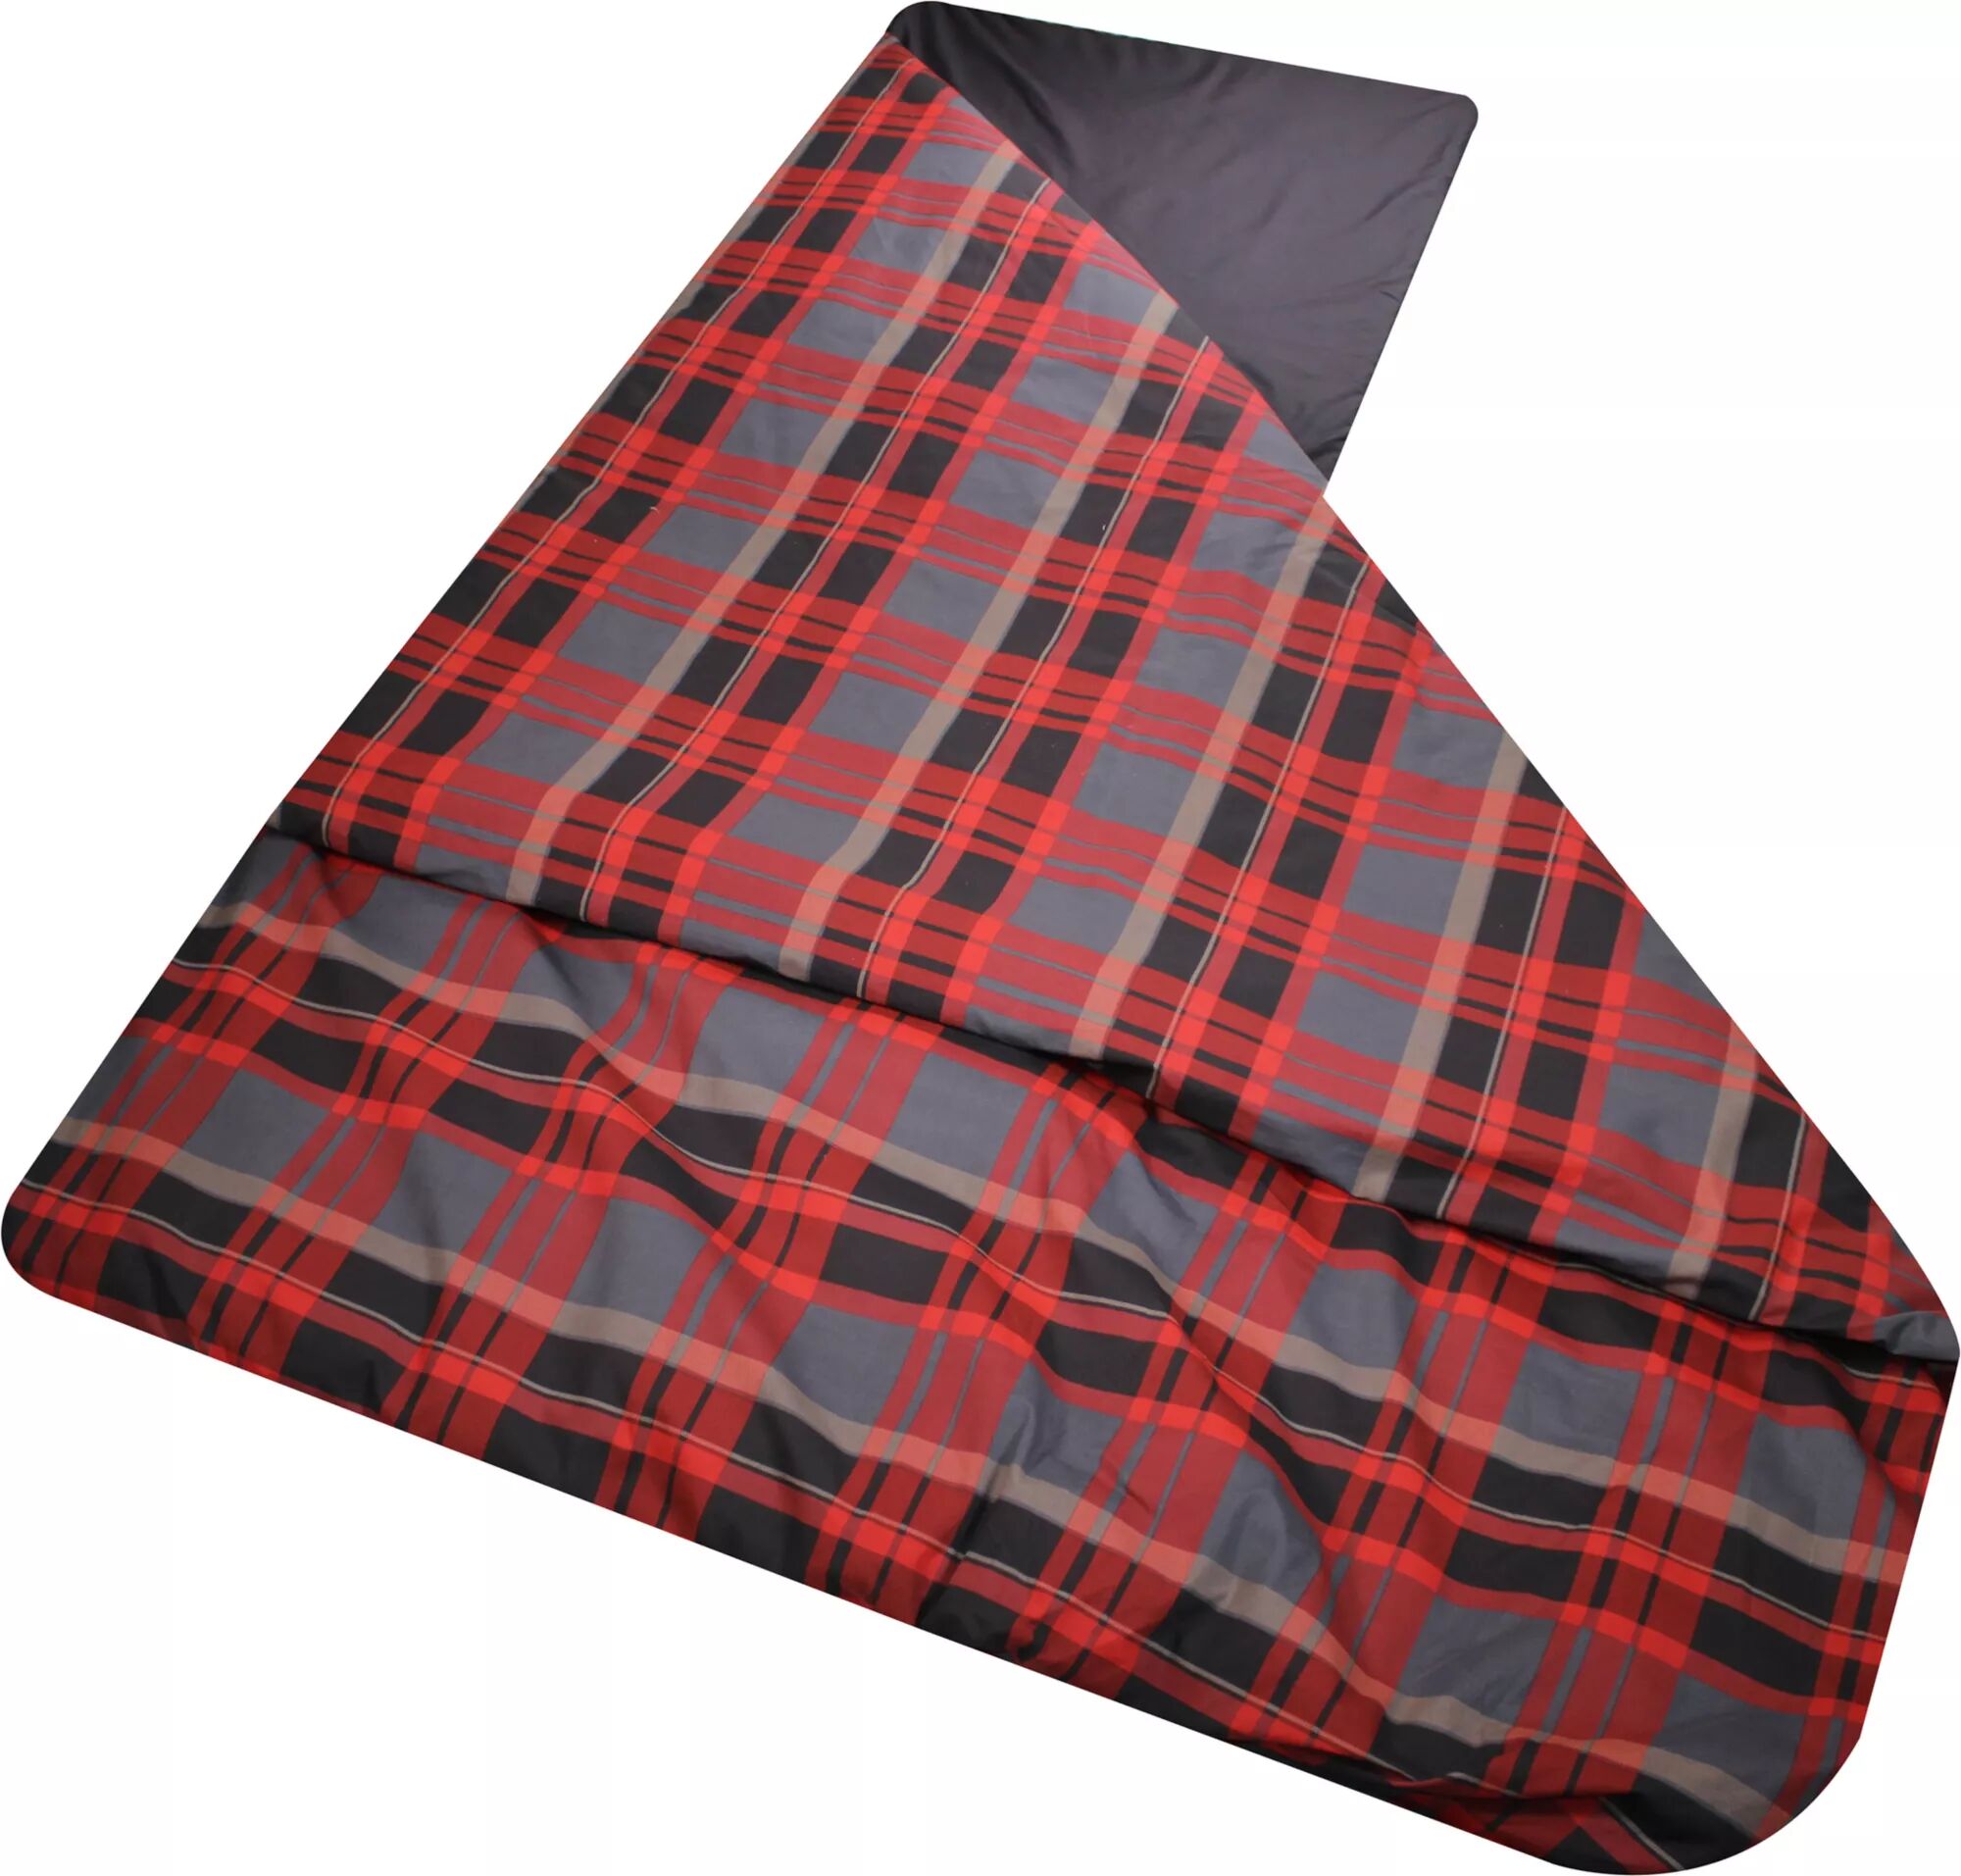 Photos - Sleeping Bag Disc-O-Bed Large Duvalay Blanket, Men's, Red 22dobudvlylrgxxxxcsl